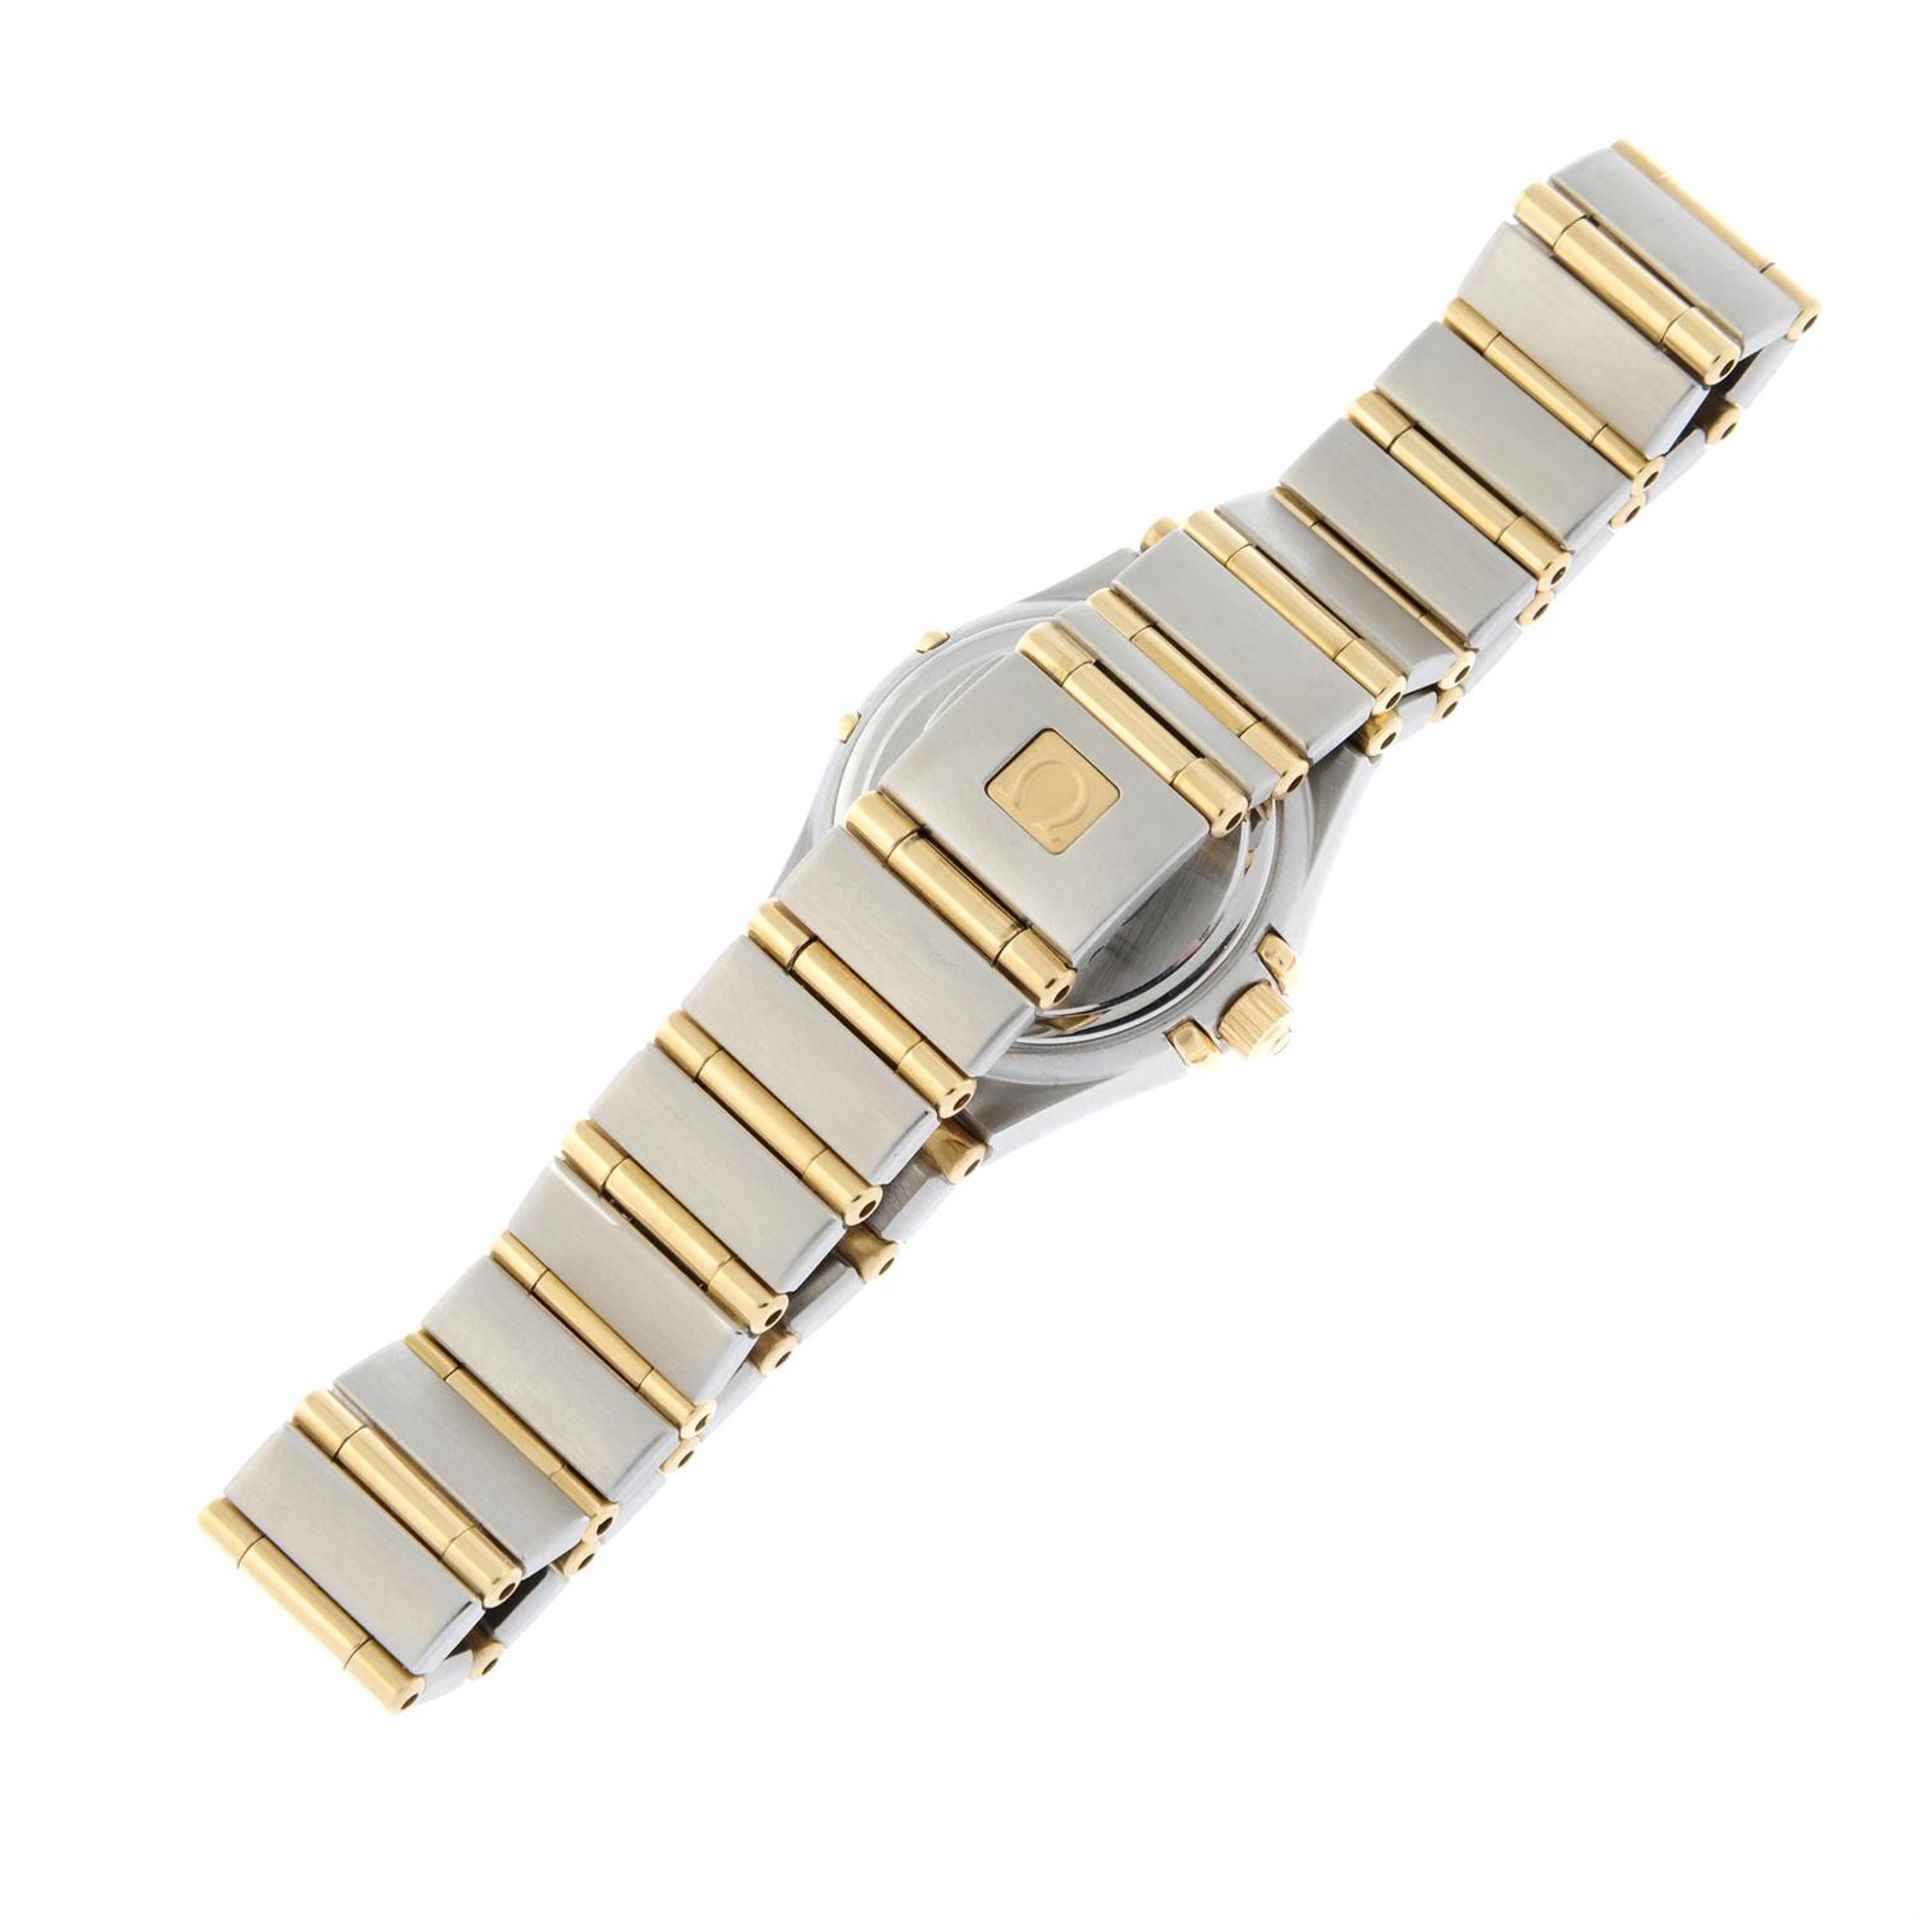 OMEGA - a factory diamond set bi-metal Constellation bracelet watch, 22.5mm - Image 2 of 5